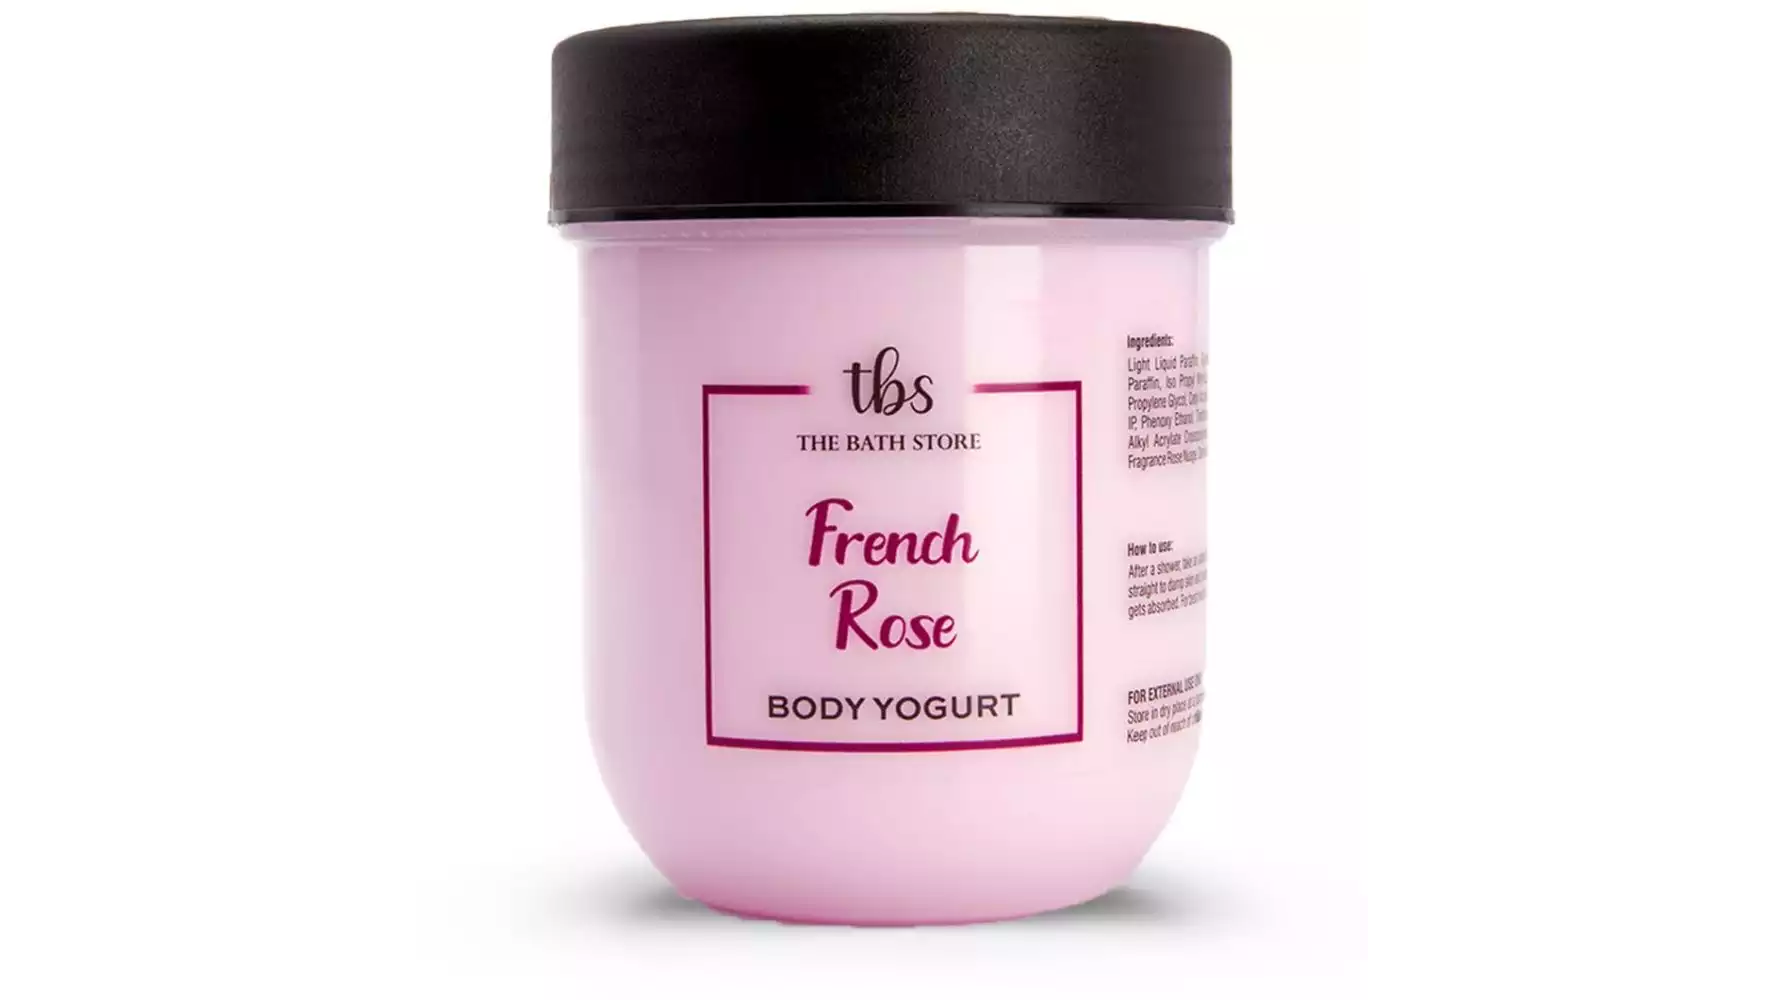 The Bath Store French Rose Body Yogurt (200g)